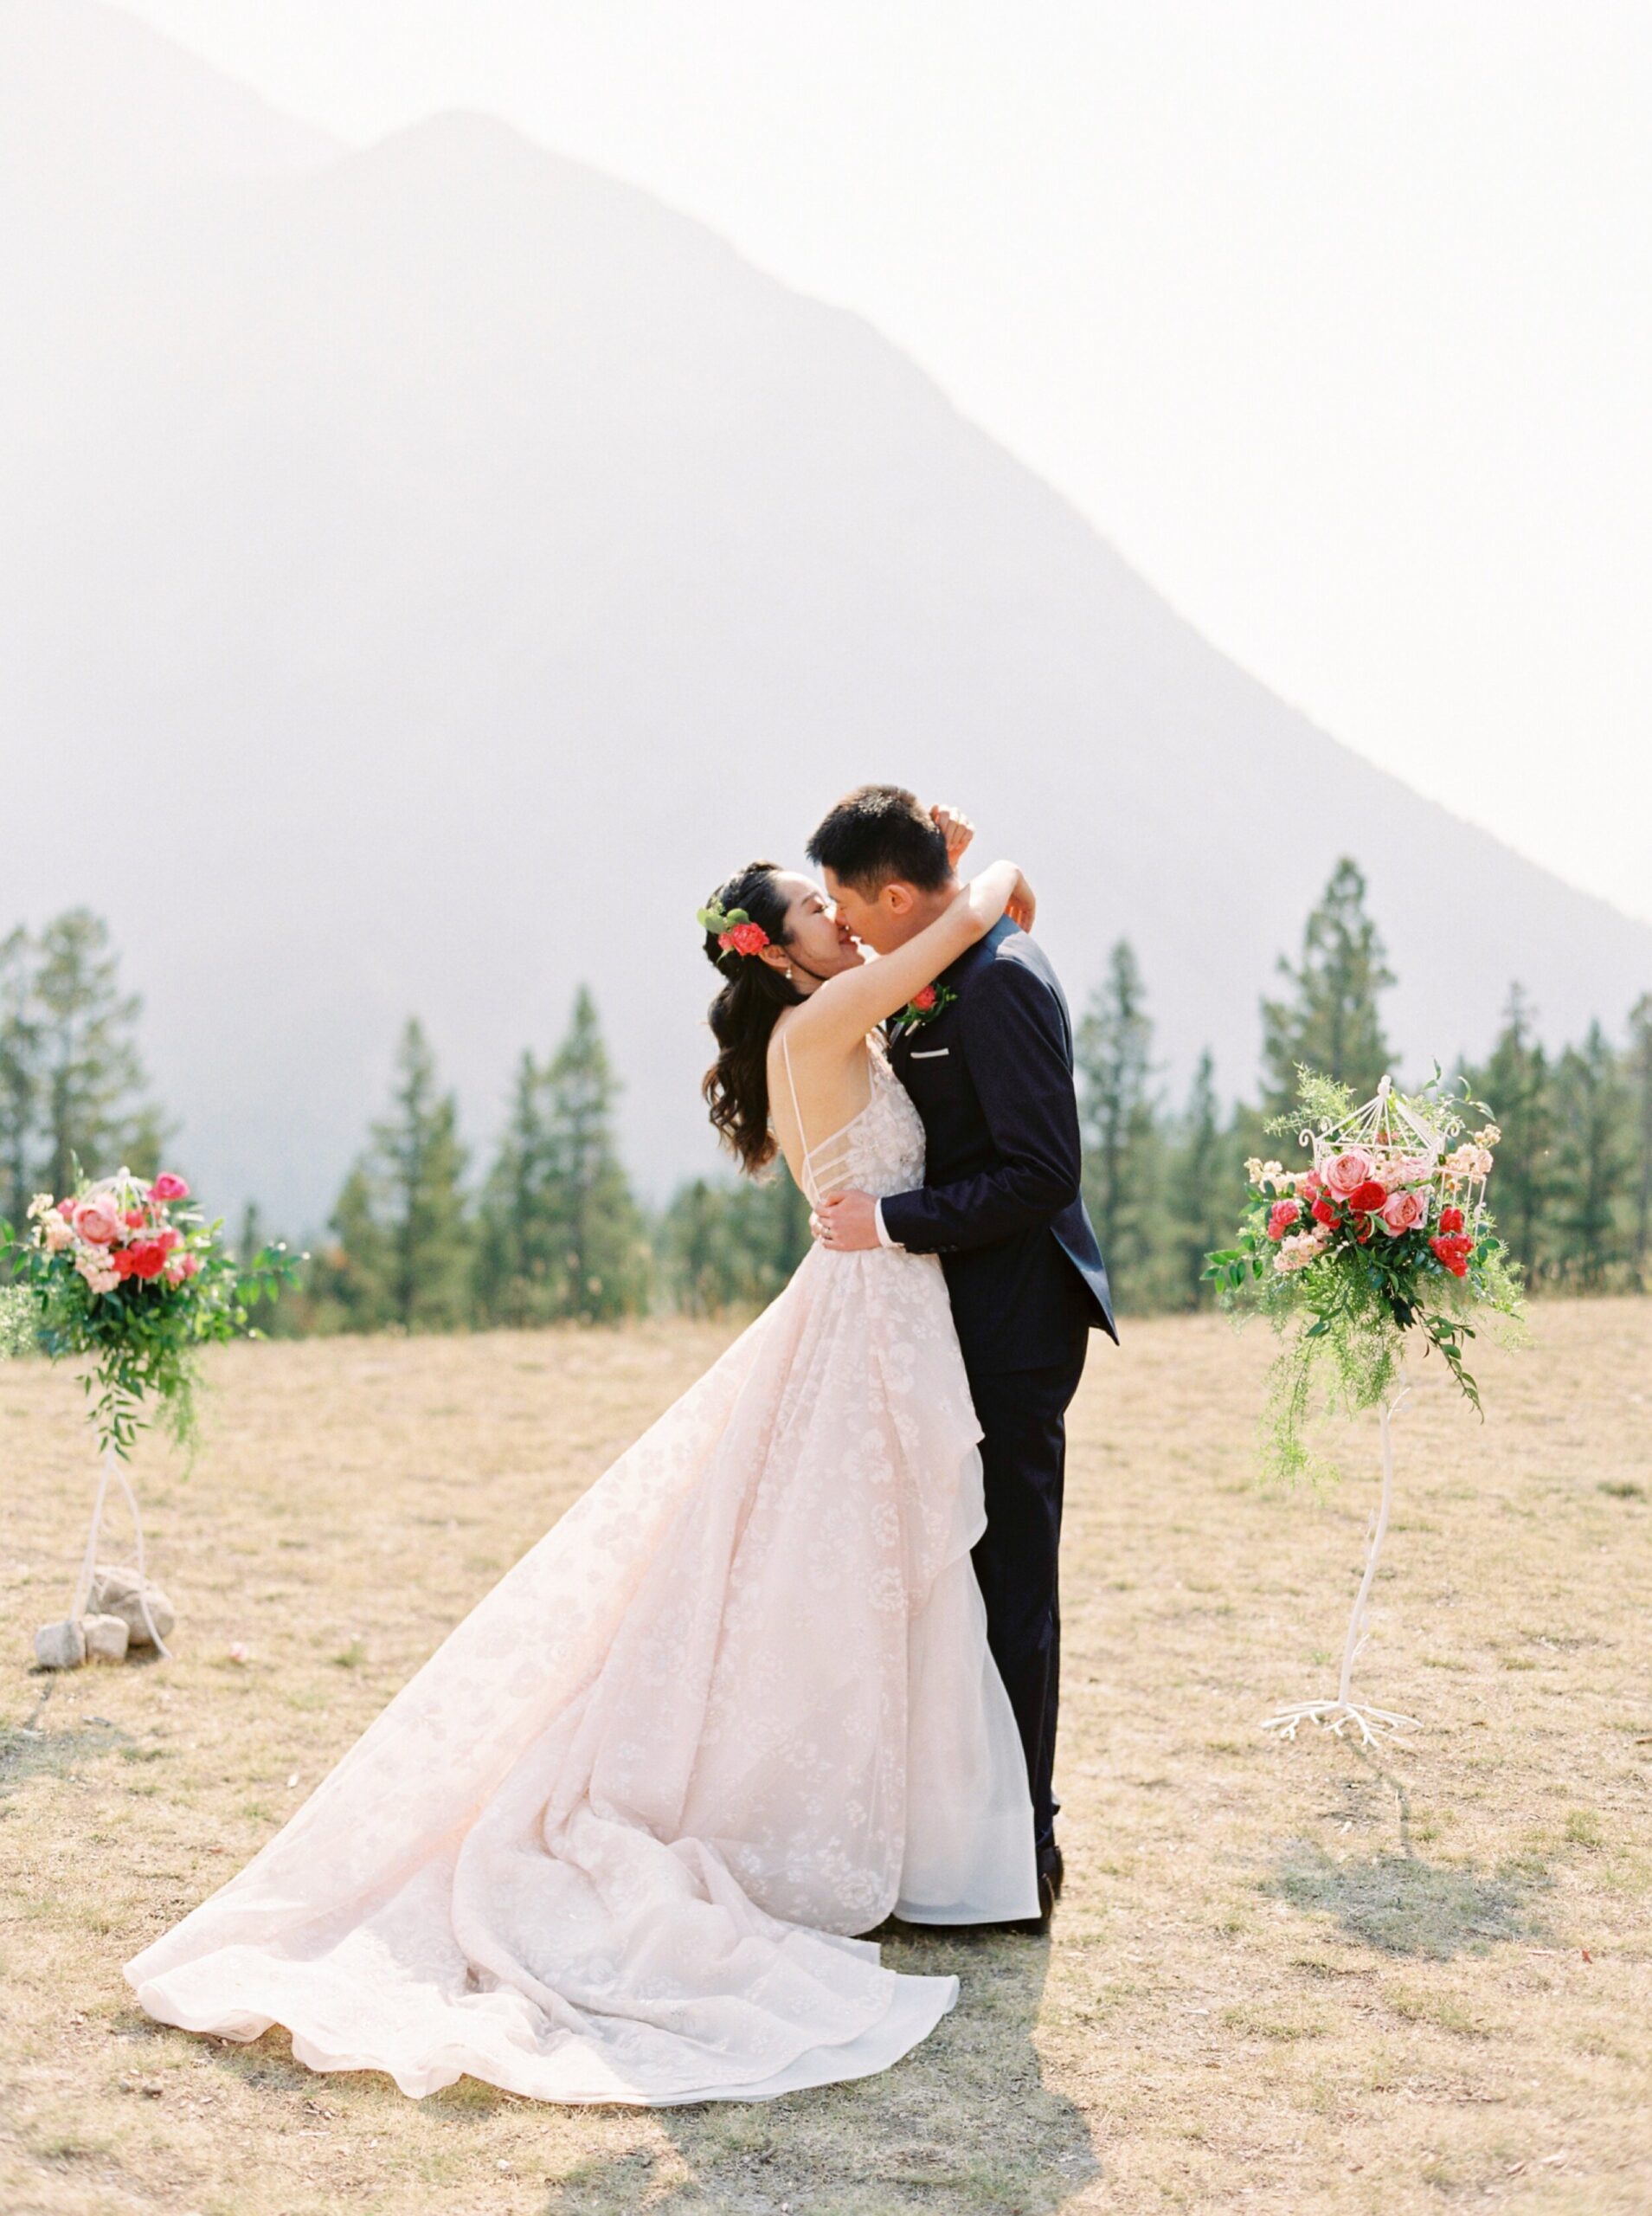  Banff wedding photographer | intimate wedding elopement | outdoor ceremony tunnel mountain | Justine milton photography 